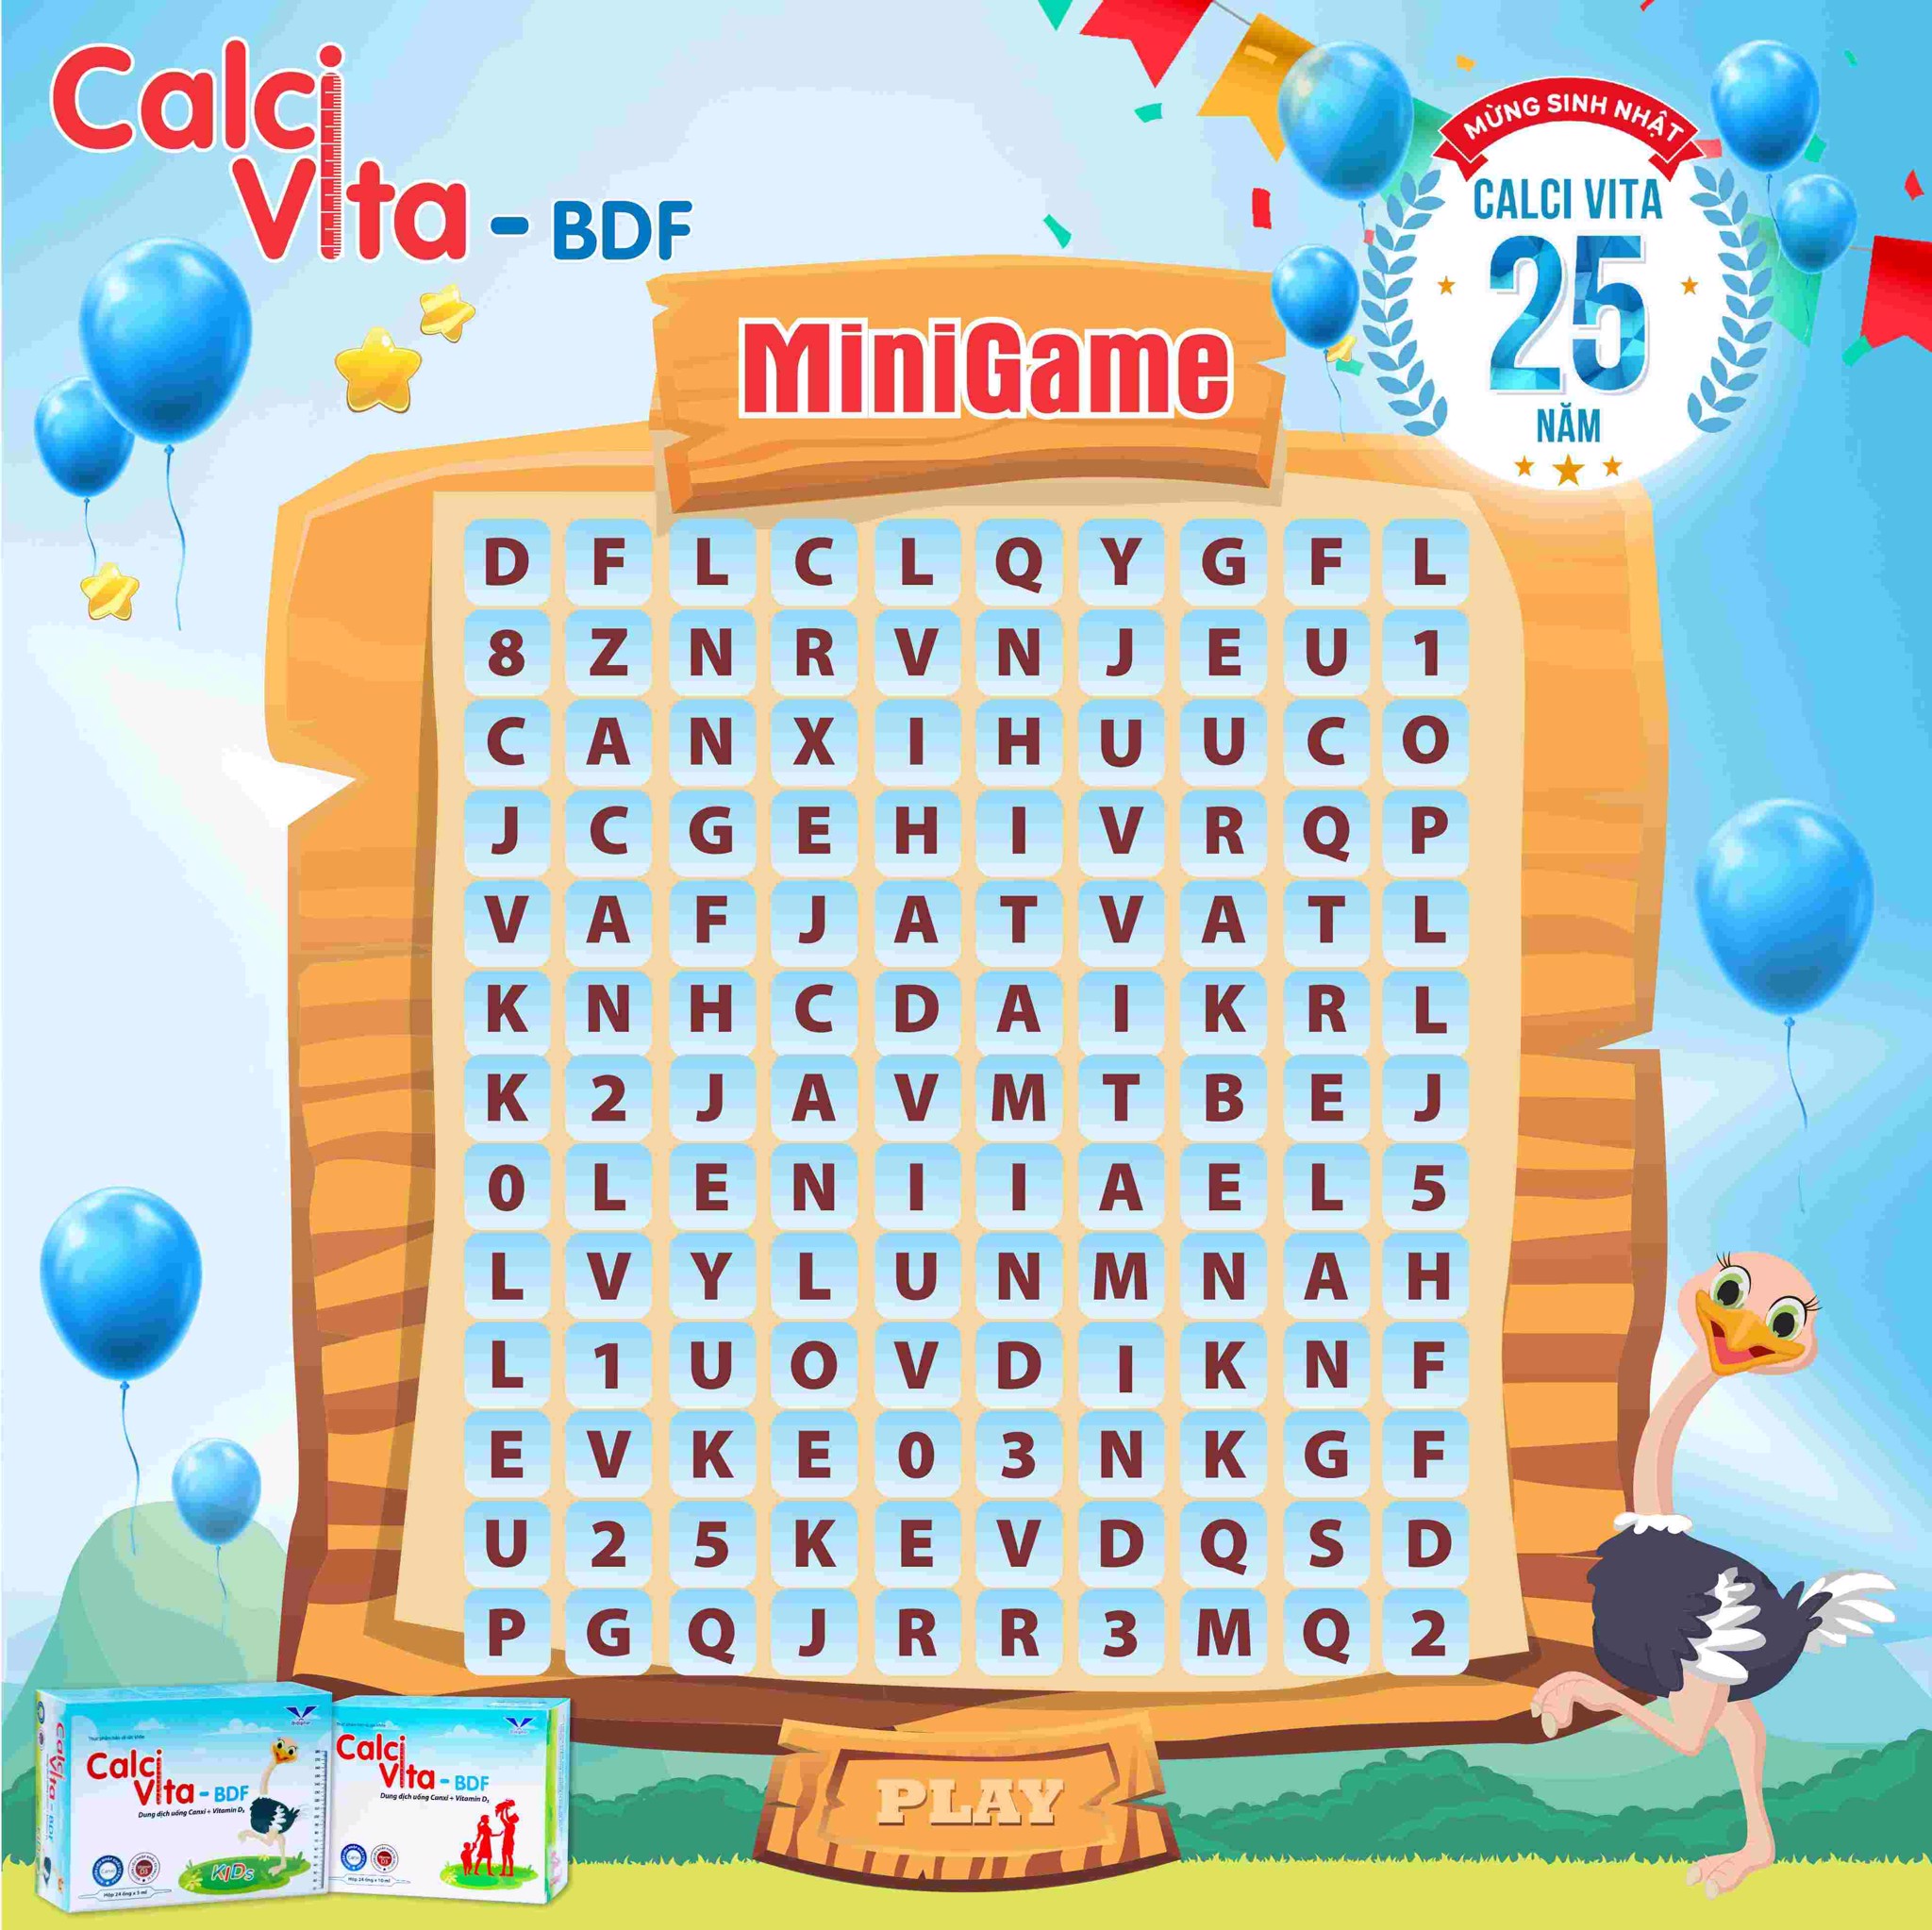 mini game ra mắt calci vita bdf